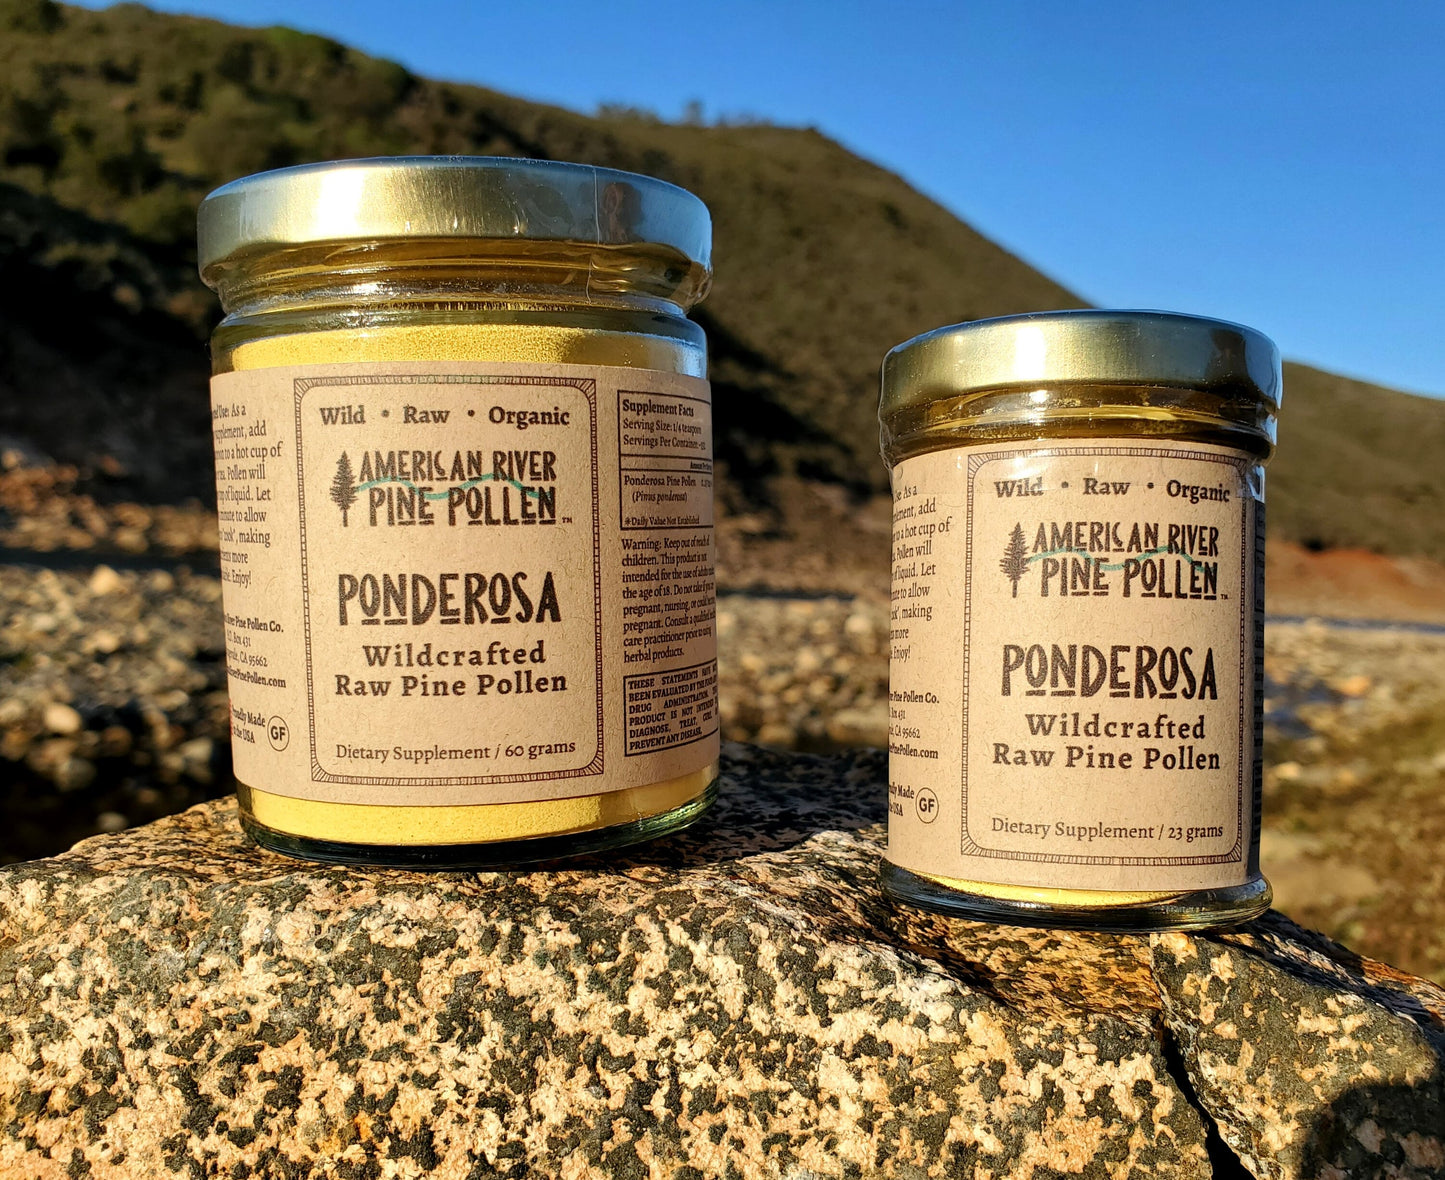 Ponderosa Pine Pollen - Raw and Wild-Harvested